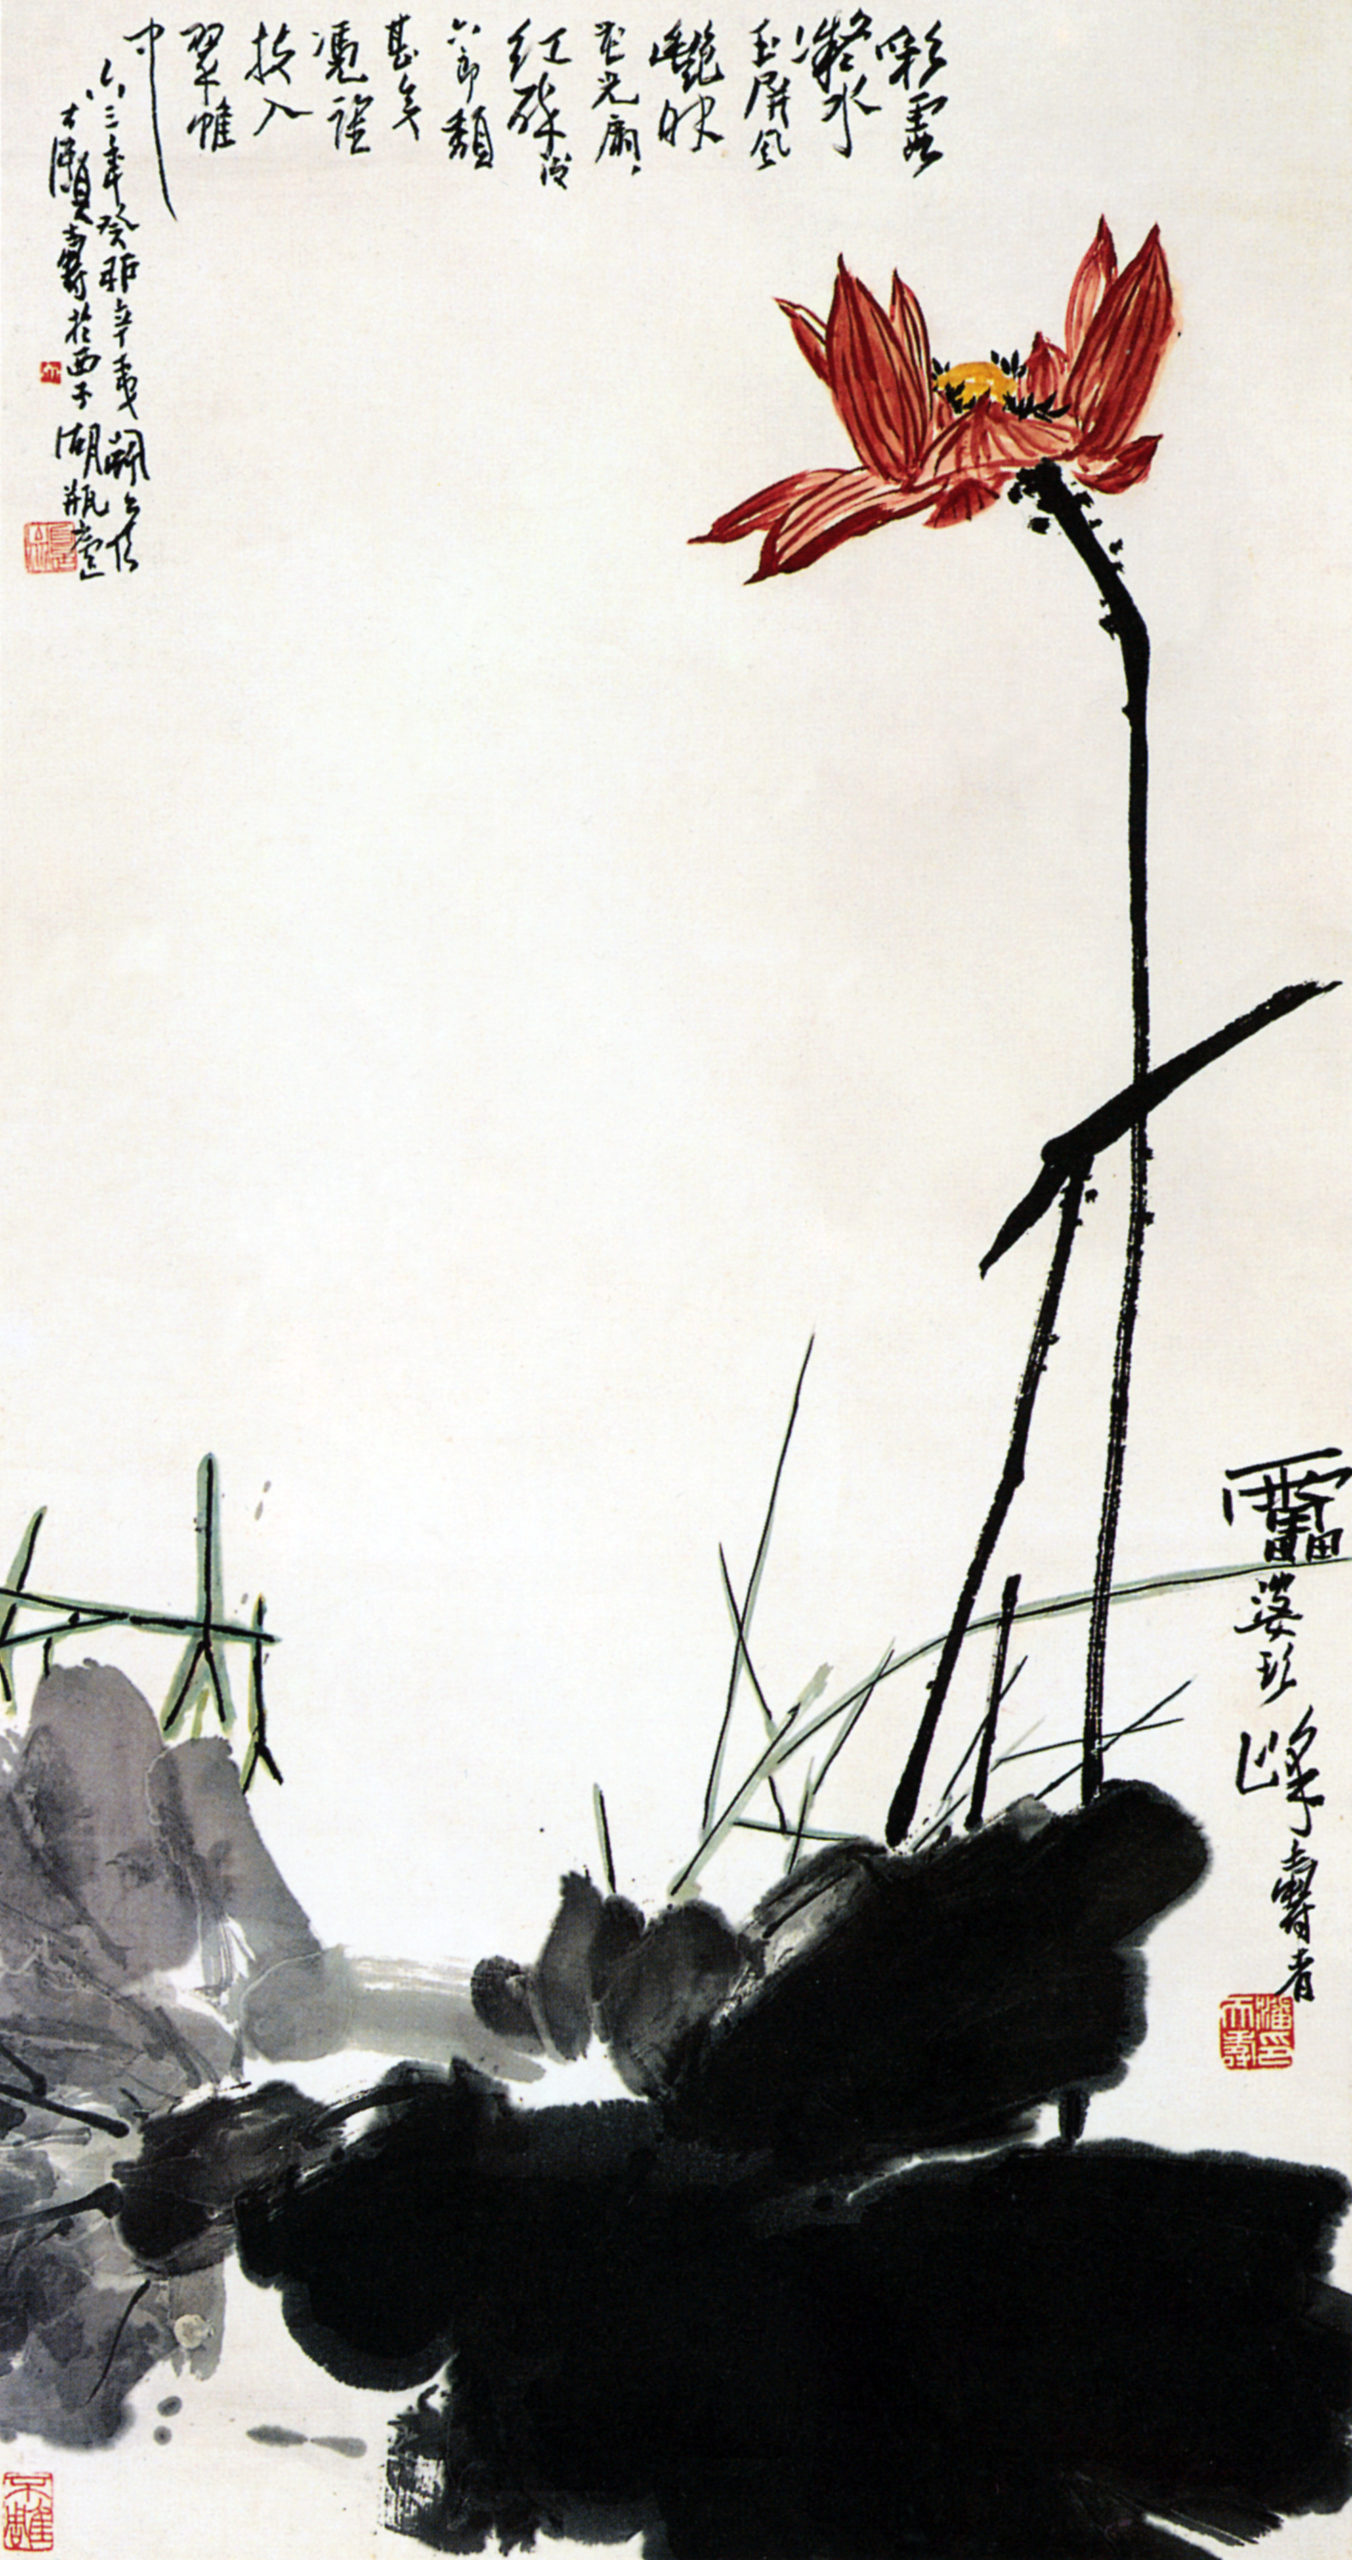 Pan Tianshou, Red Lotus, 1963, ink and color on paper (hanging scroll), 161.5 x 99 cm (Pan Tianshou Memorial, Hangzhou)